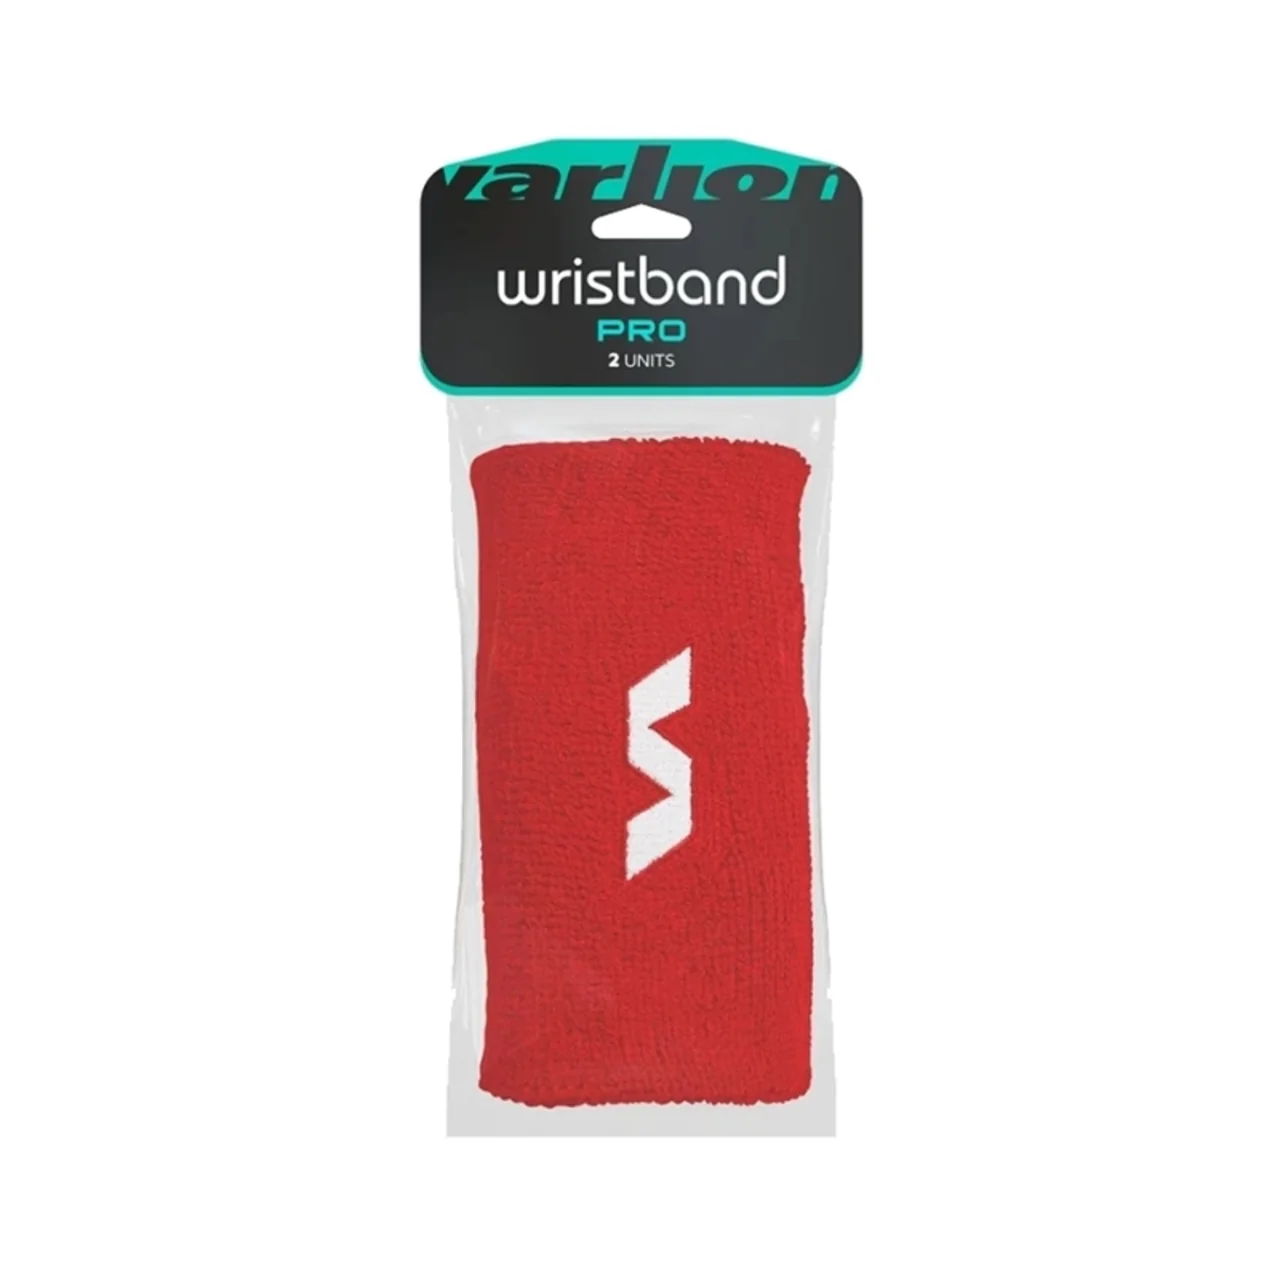 Varlion Pro Wristband x2 Red/White